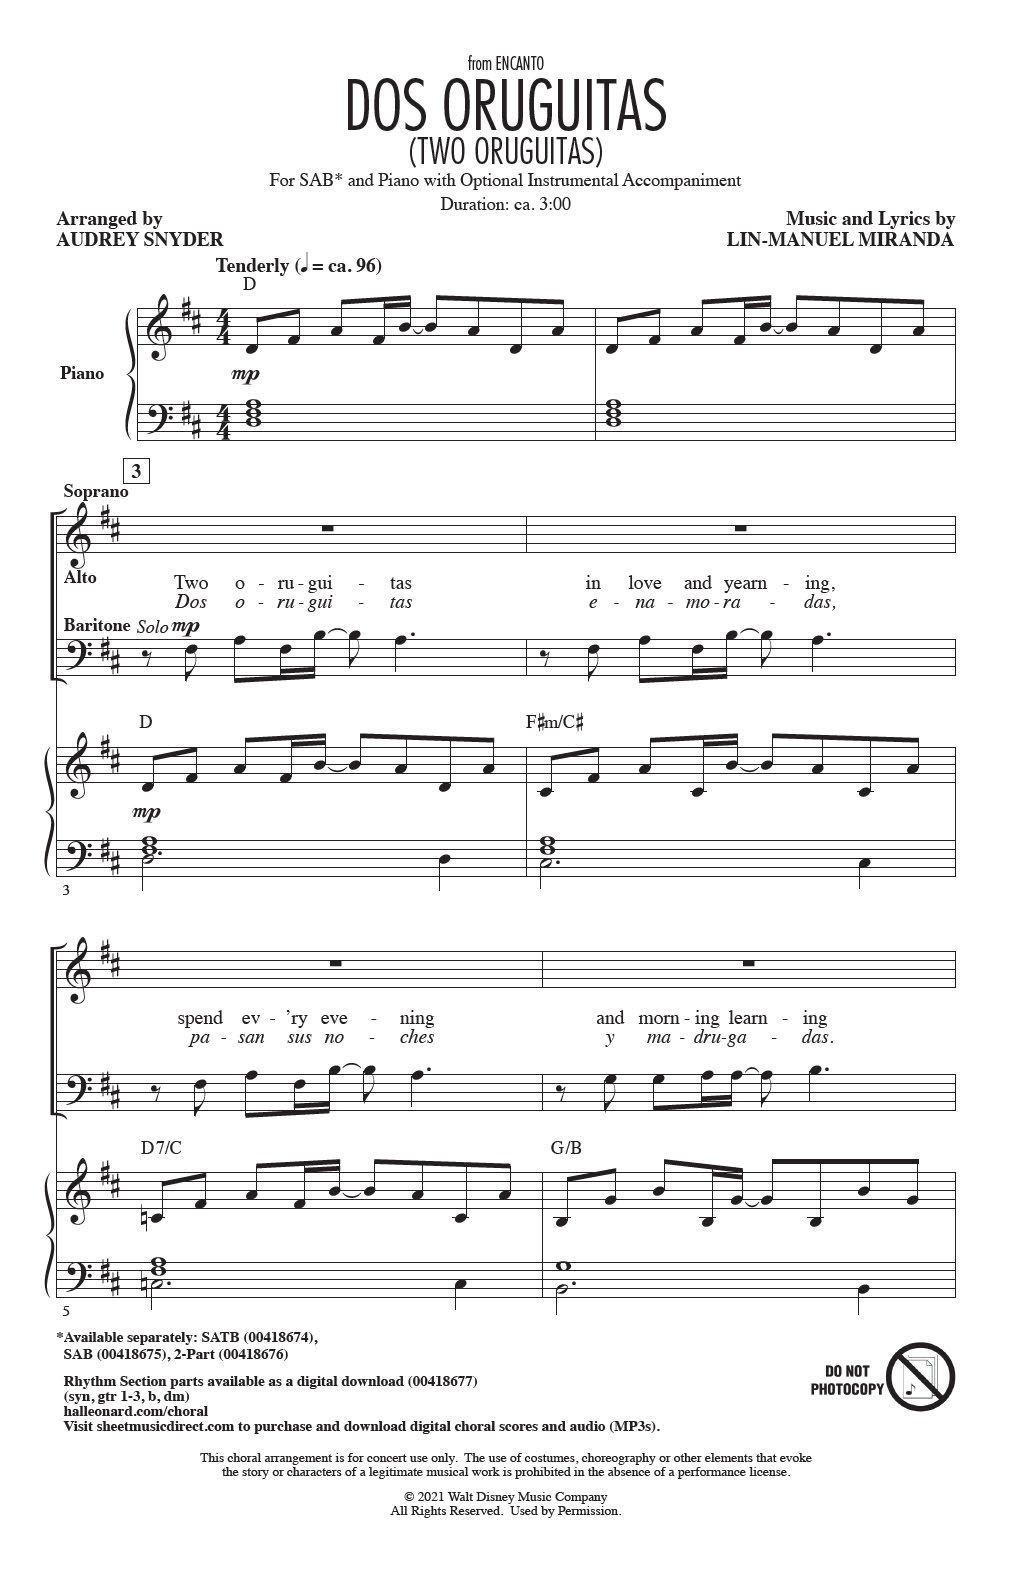 Lin-Manuel Miranda Dos Oruguitas (from Encanto) (arr. Audrey Snyder) Sheet Music Notes & Chords for SATB Choir - Download or Print PDF